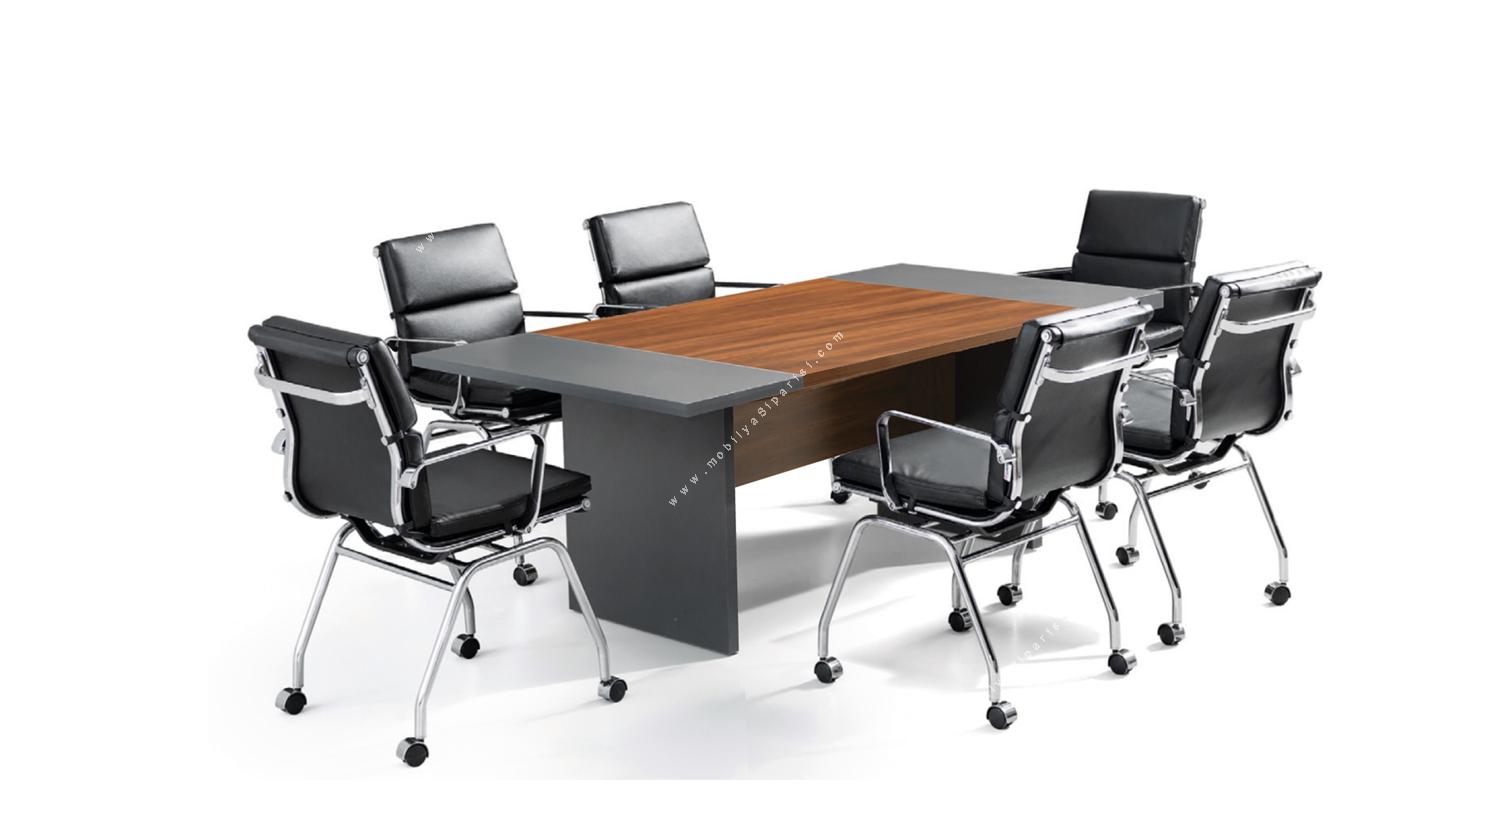 efow ahşap çift renkli toplantı masası 210cm